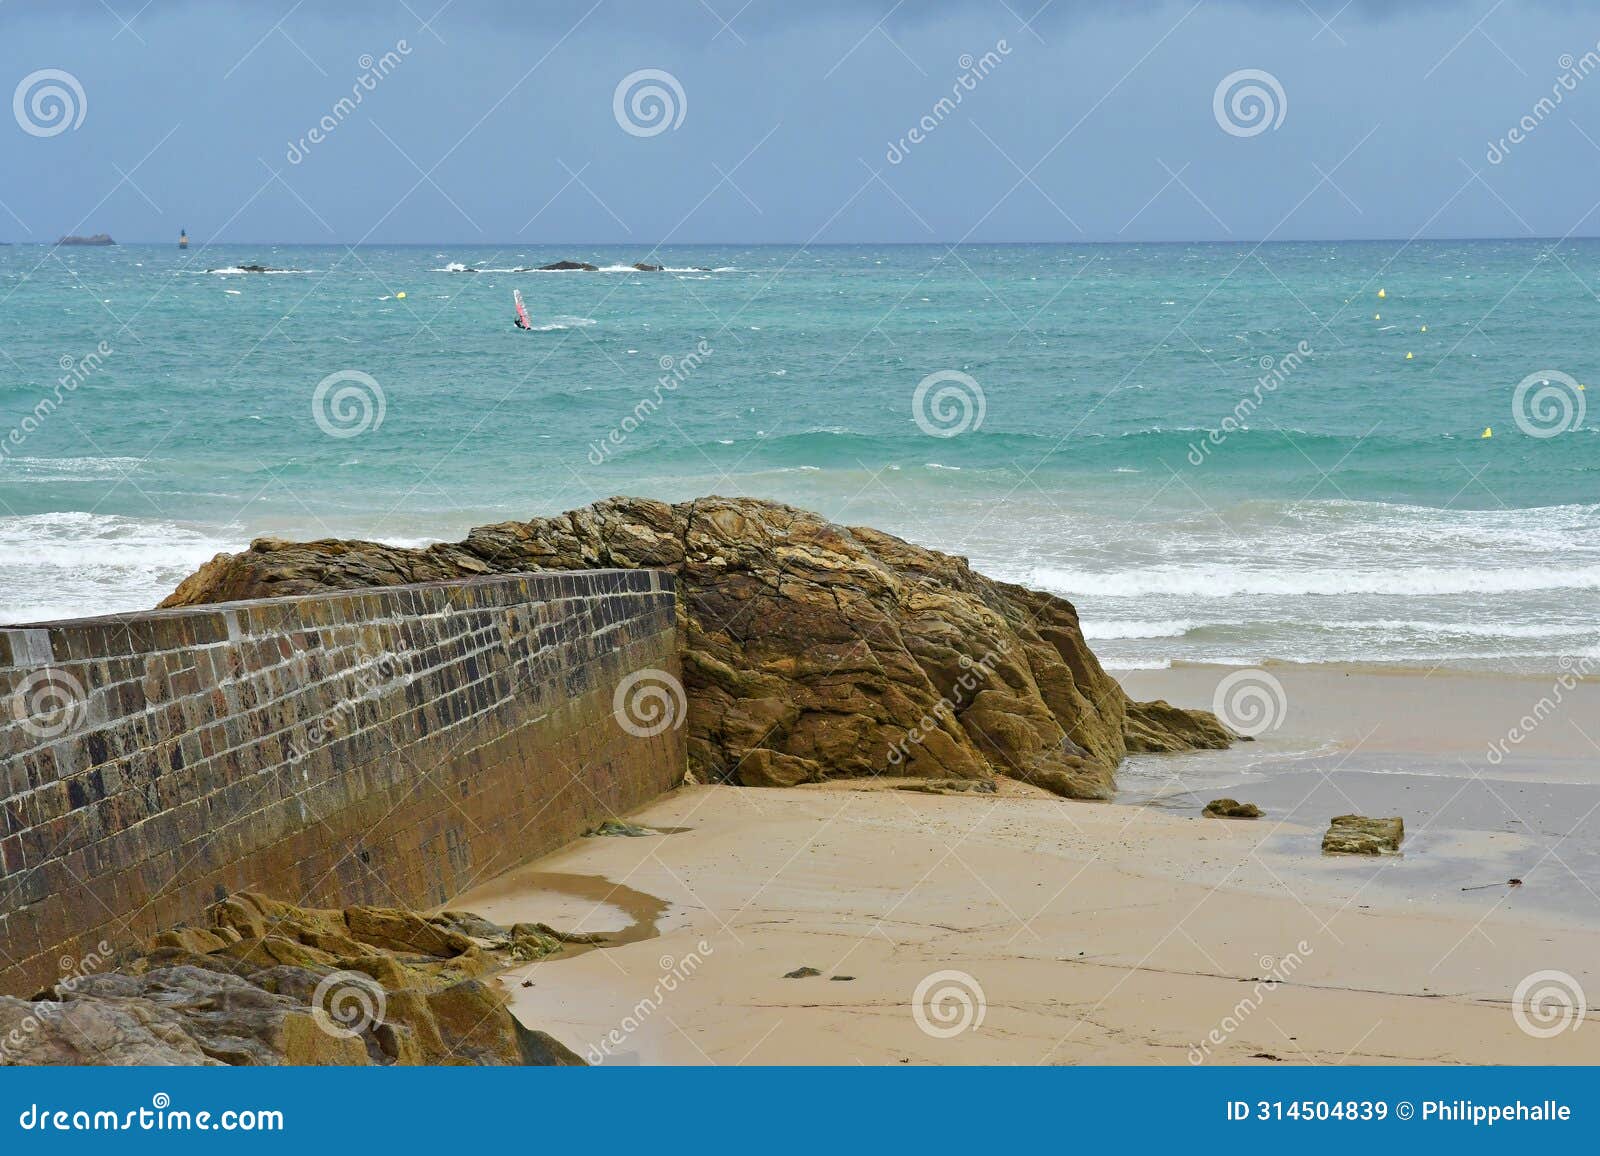 saint malo france - july 30 2023 : sillon beach